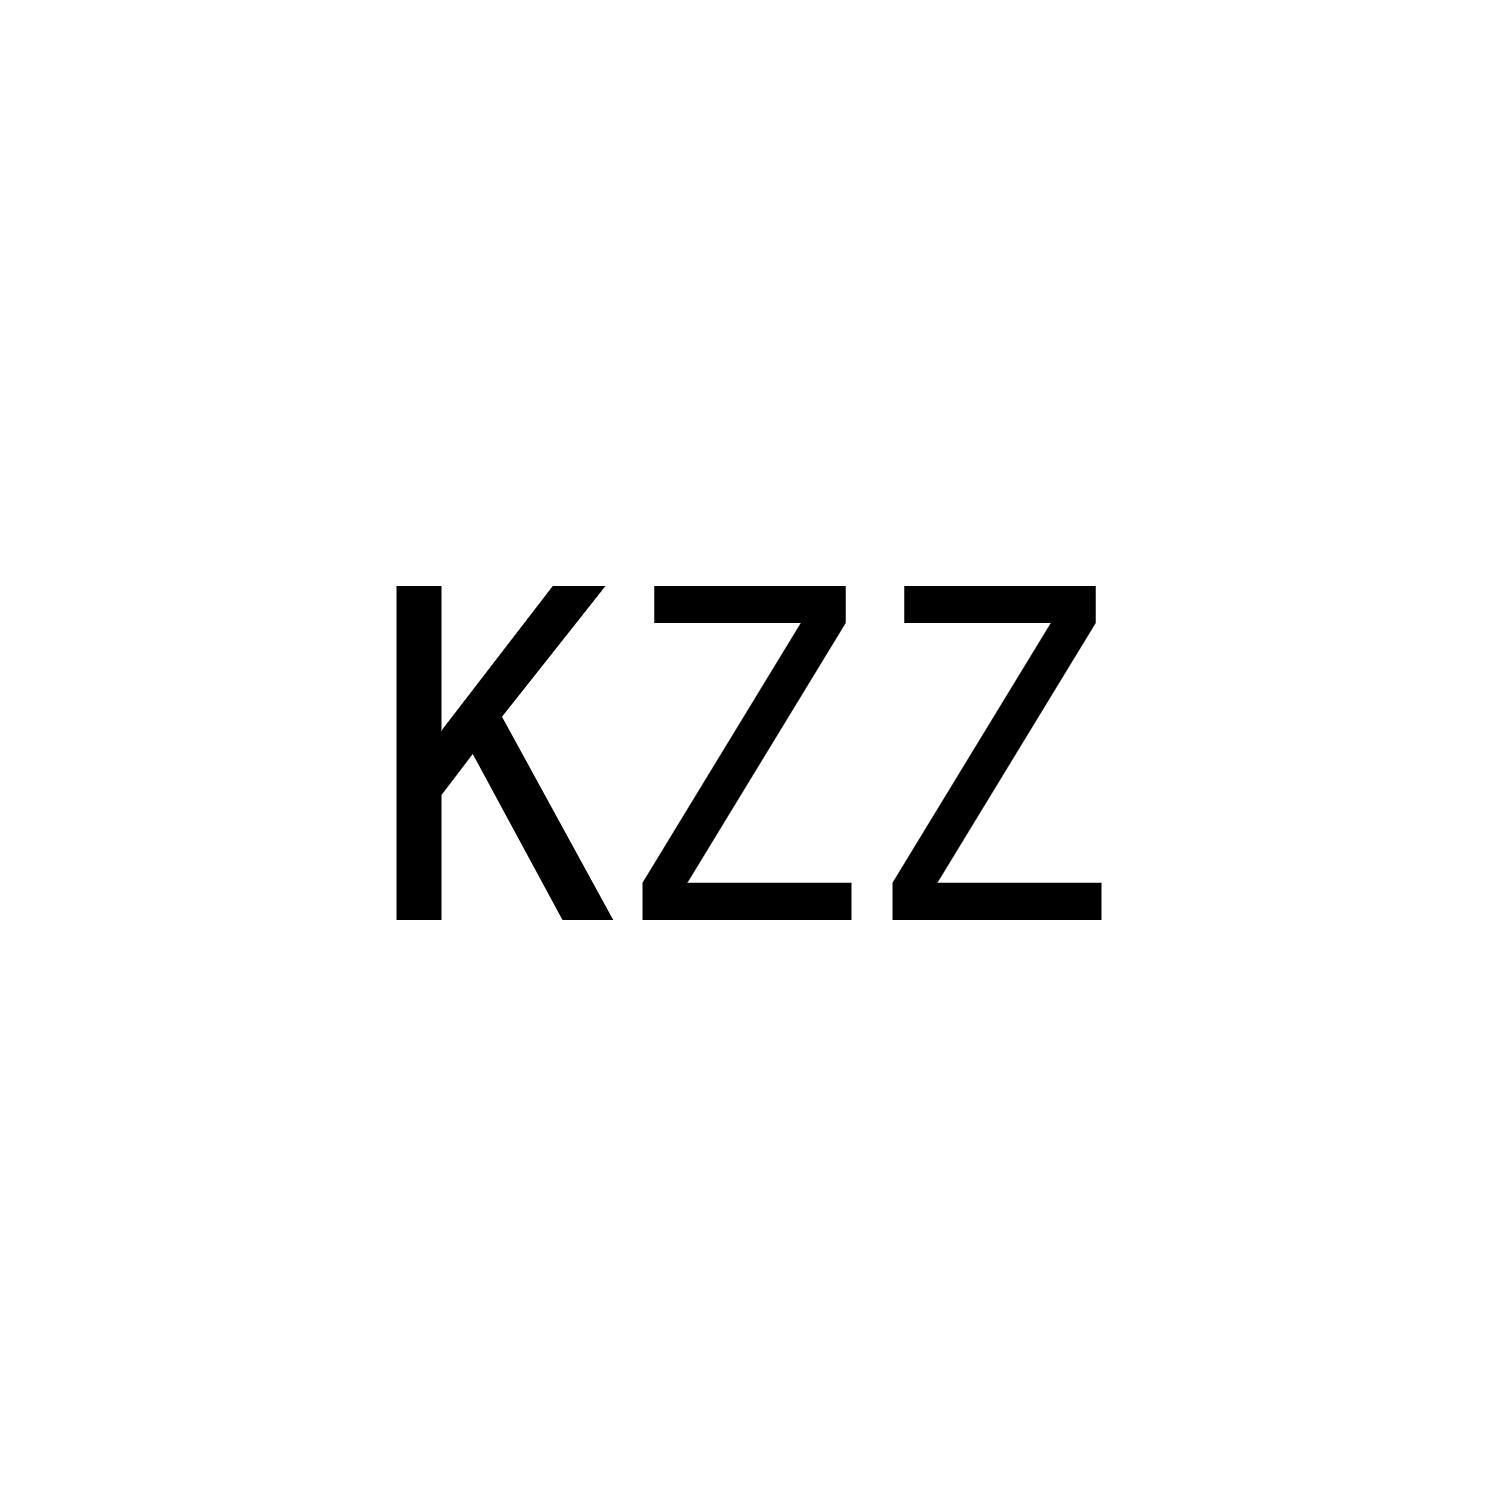 KZZ